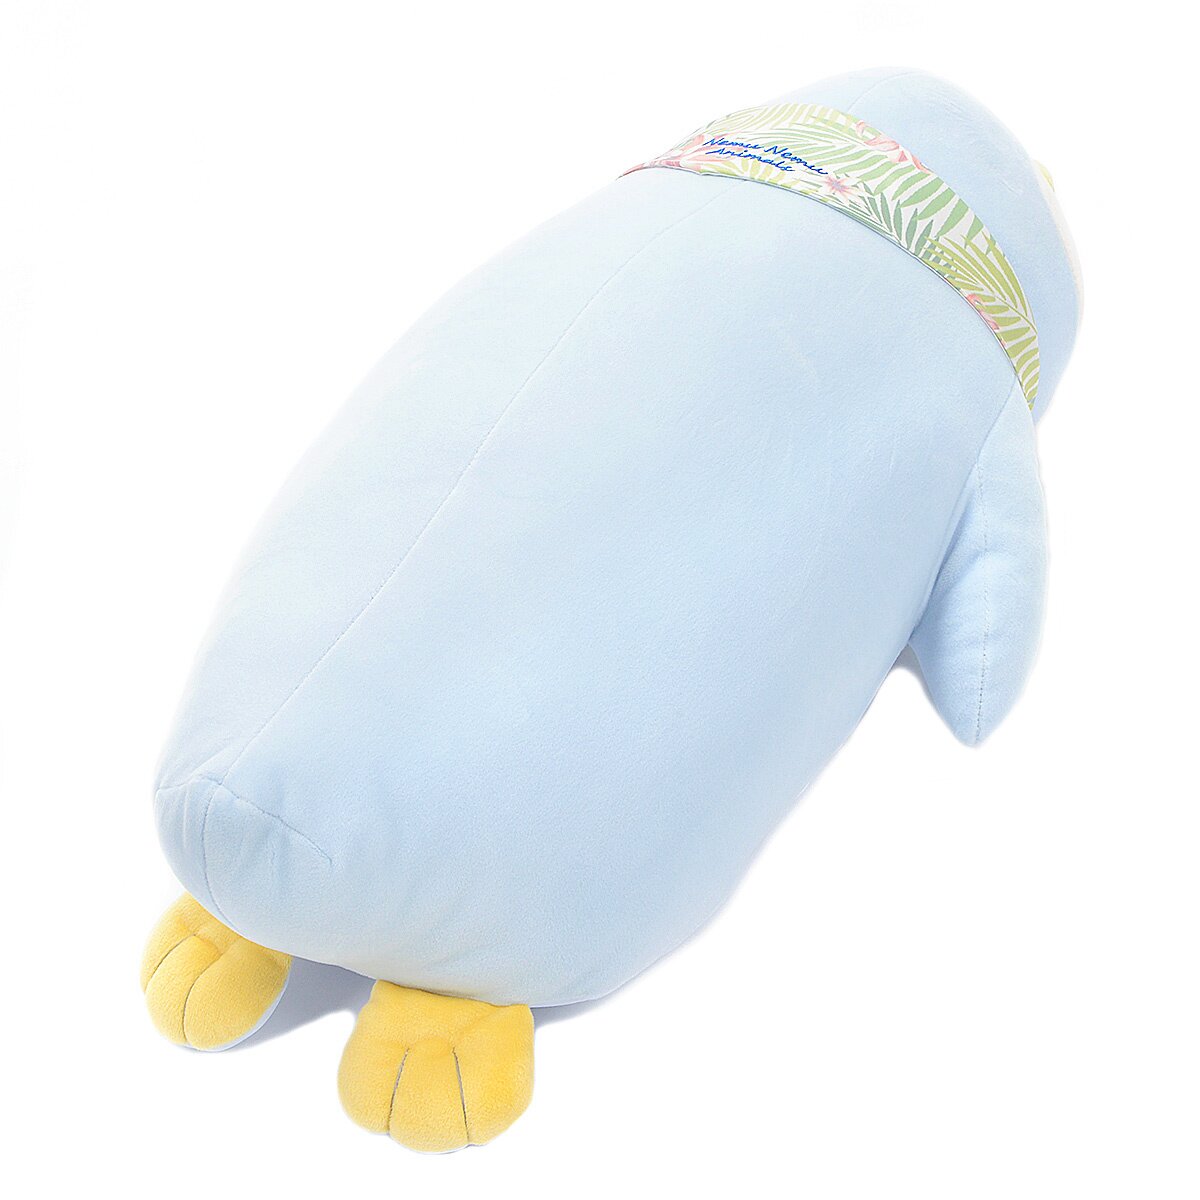 Thanko's USB Heated Air Hug Pillow is inflatable warm dakimakura